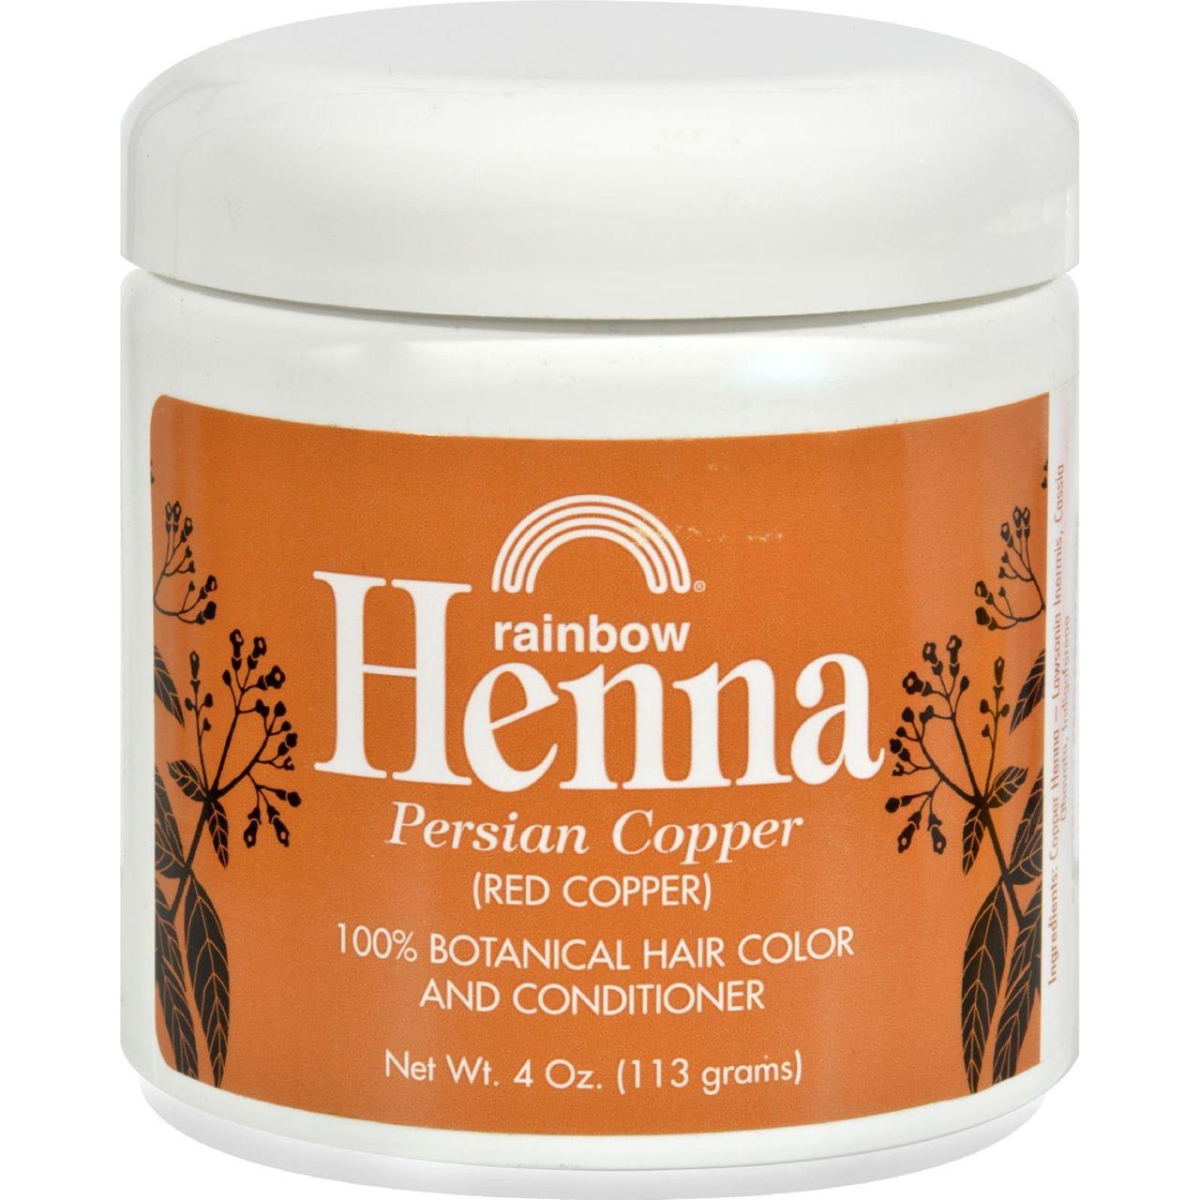 Hg0617027 4 Oz Henna Hair Color & Conditioner - Persian Copper Red Copper